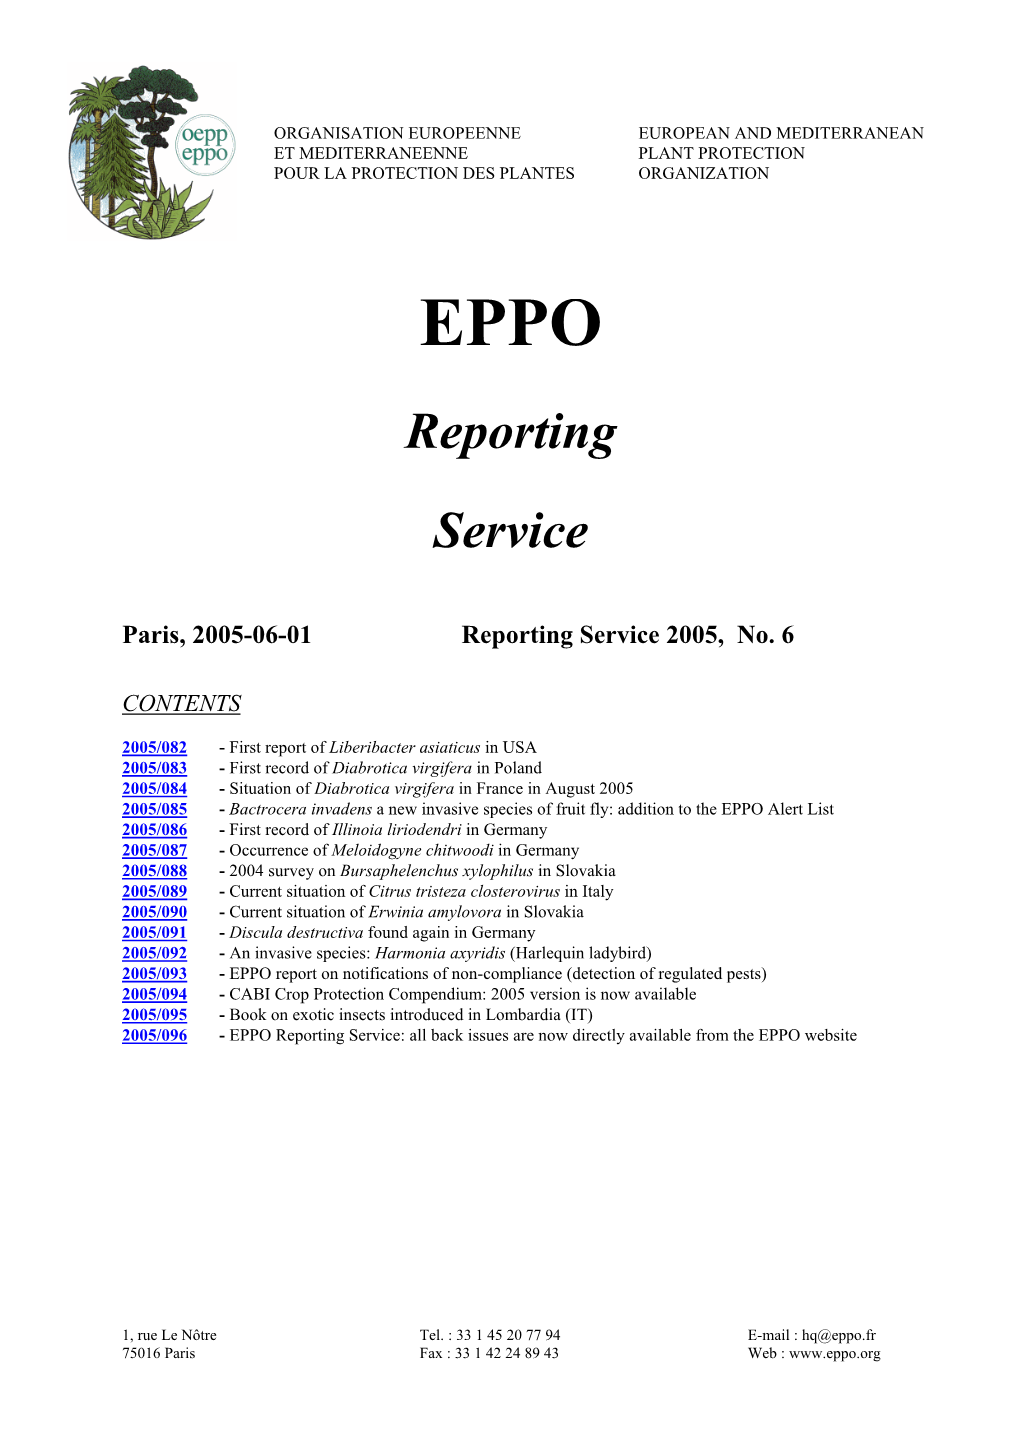 Reporting Service 2005, No